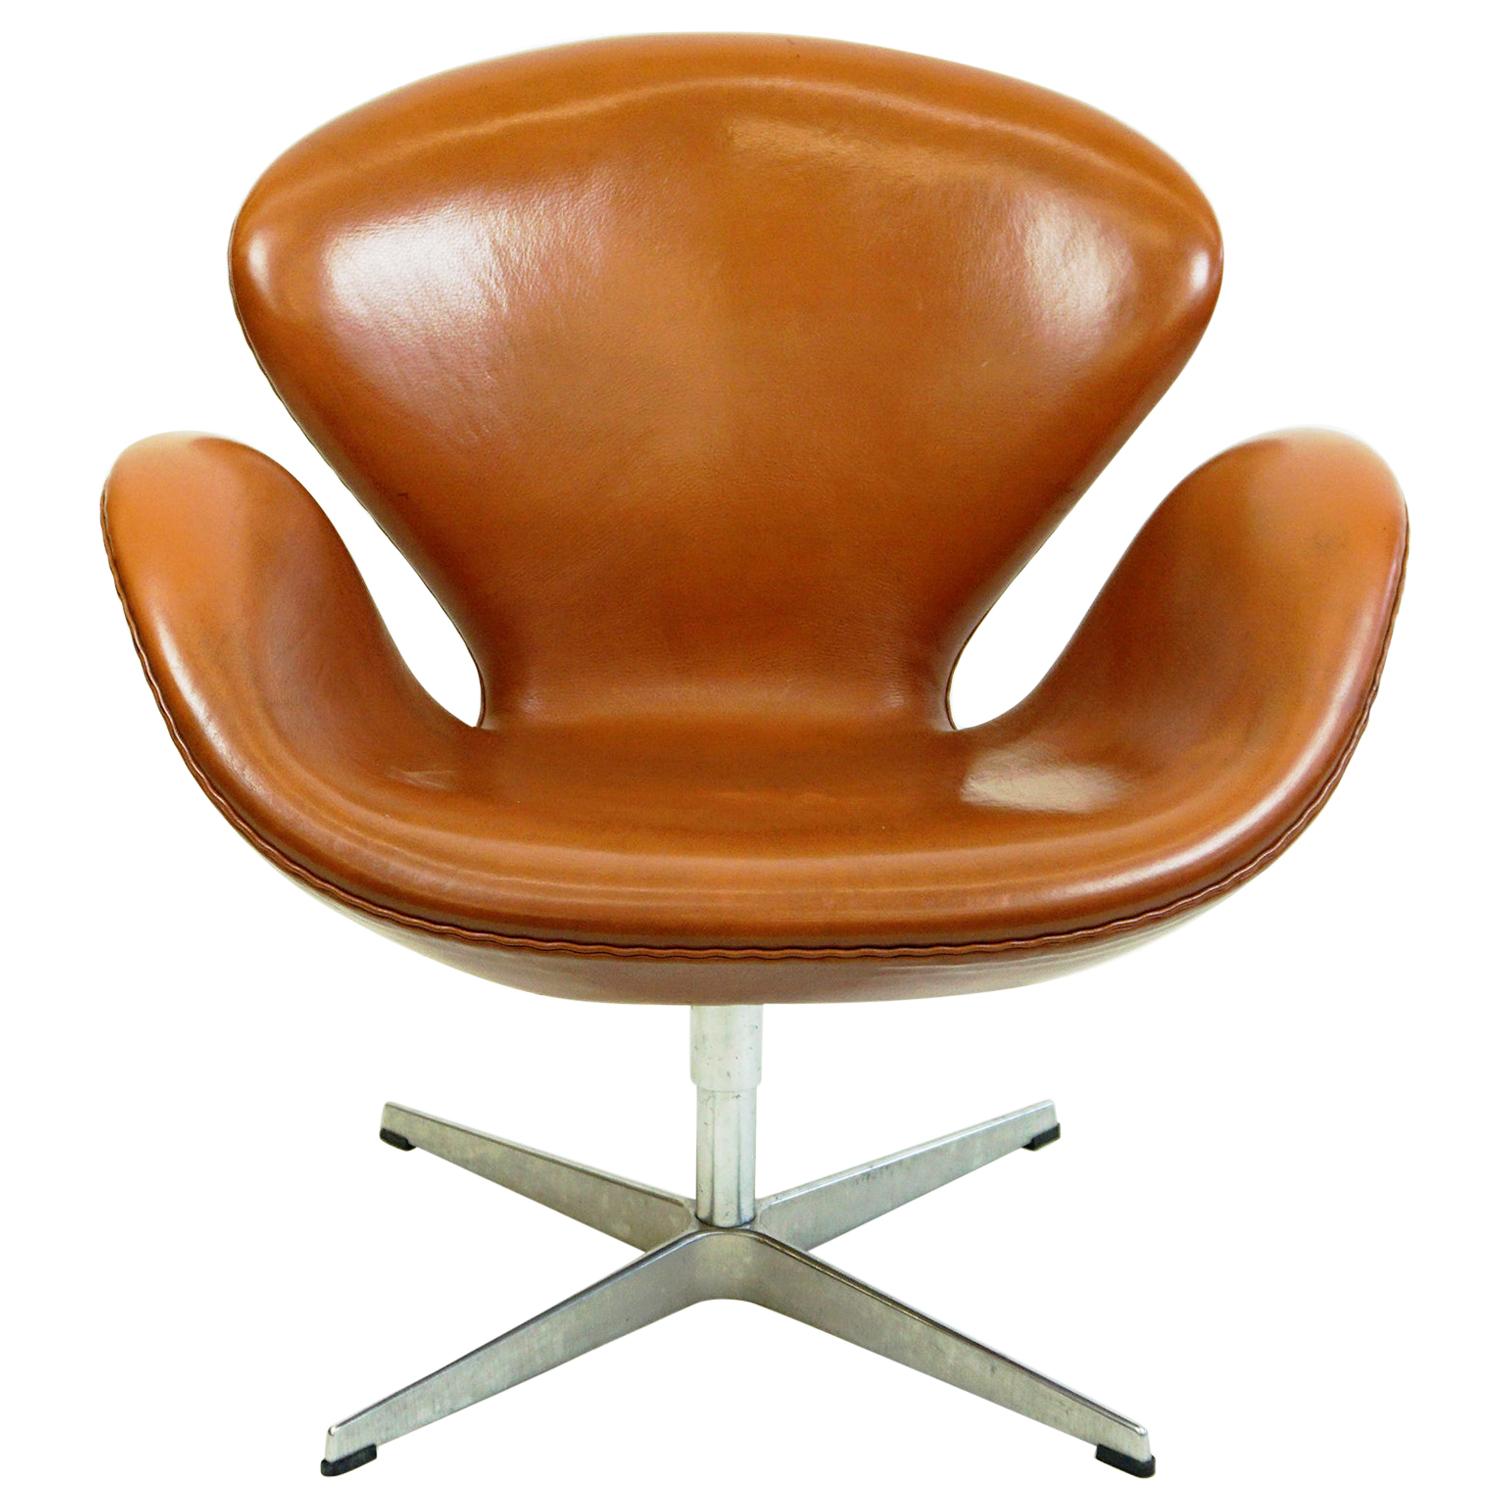 Scandinaviaan Brown Leather Swan Chair by Arne Jacobsen for Fritz Hansen Denmark